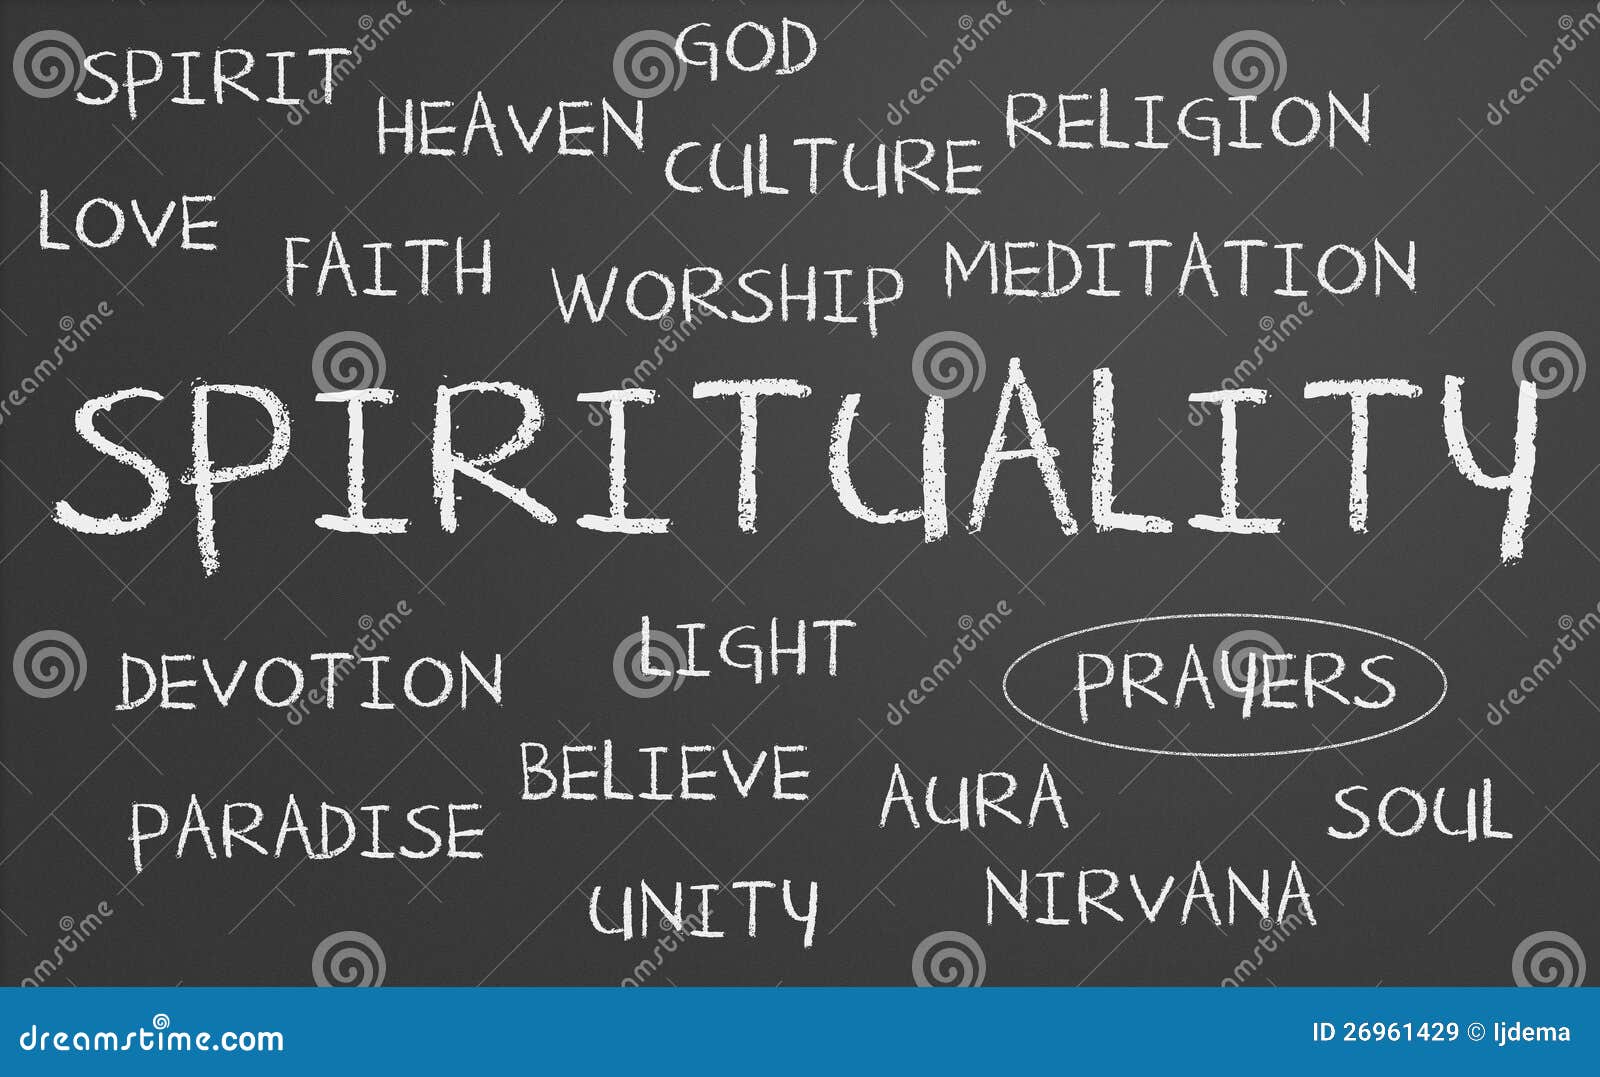 spirituality word cloud